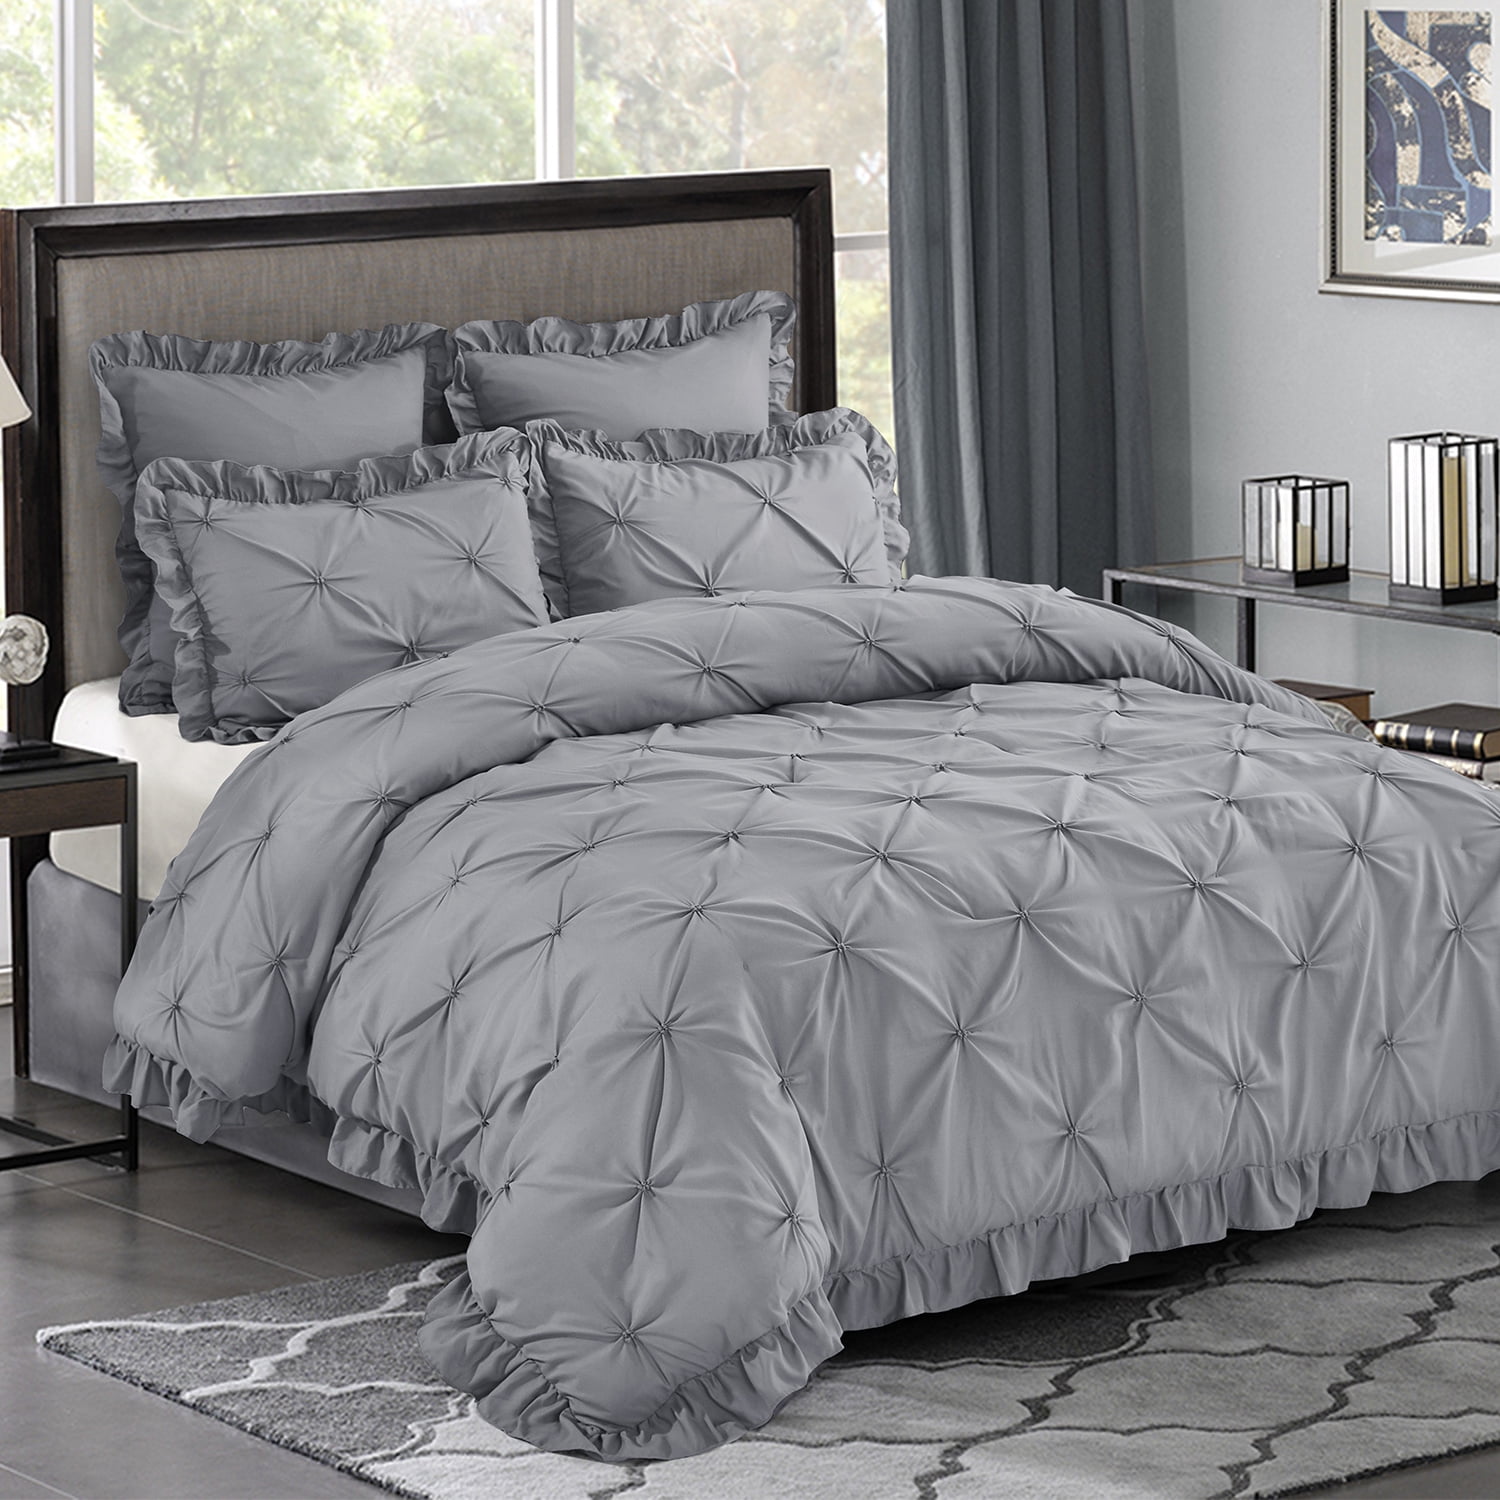 7 or 5-Piece bedding set Comforter Set Bed in a Bag,Keiskei Grey,Twin/Queen/King 